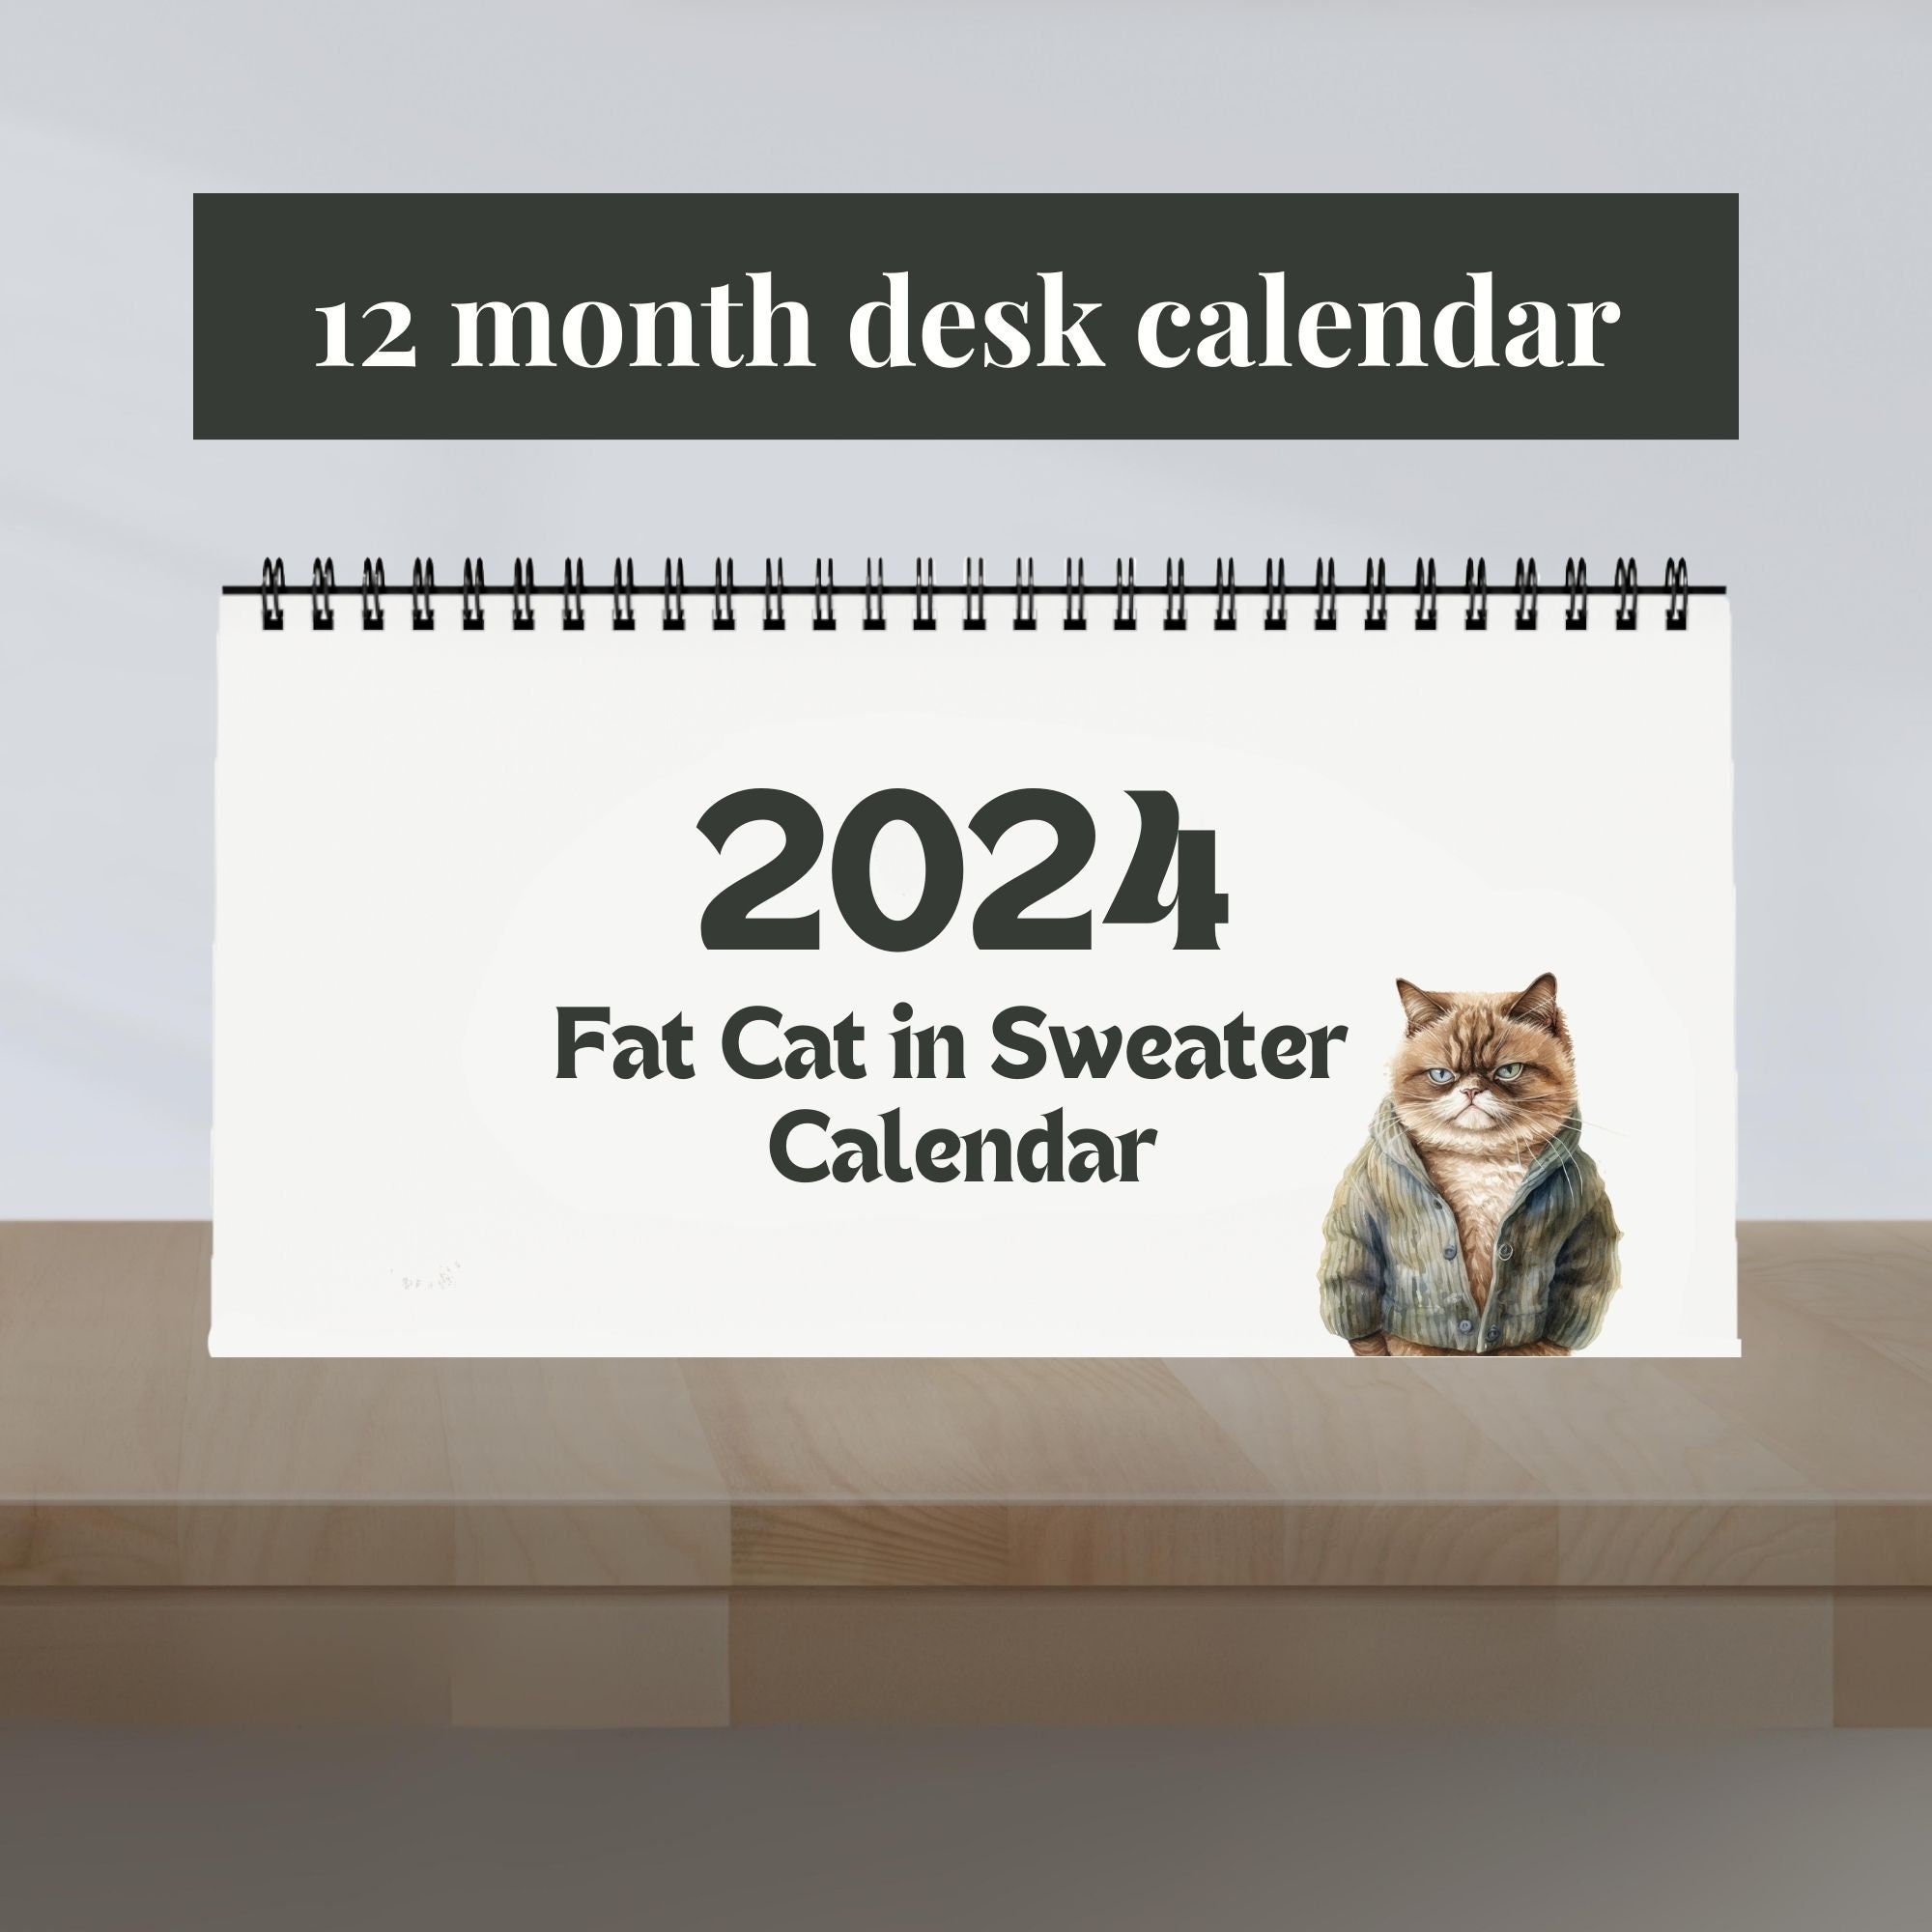 Grumpy Cat 2021 Wall Calendar: Grumpy Cat calendar 2021-2021 day